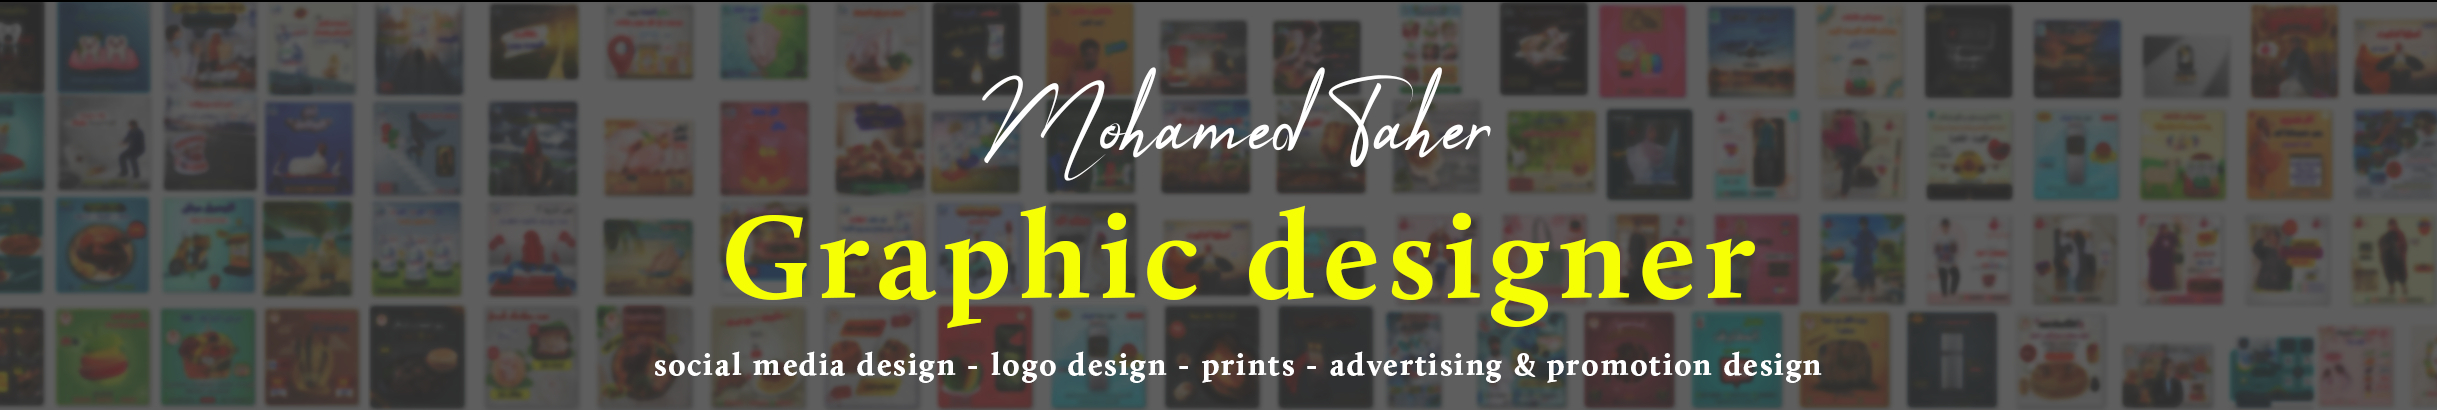 mohamed taher's profile banner